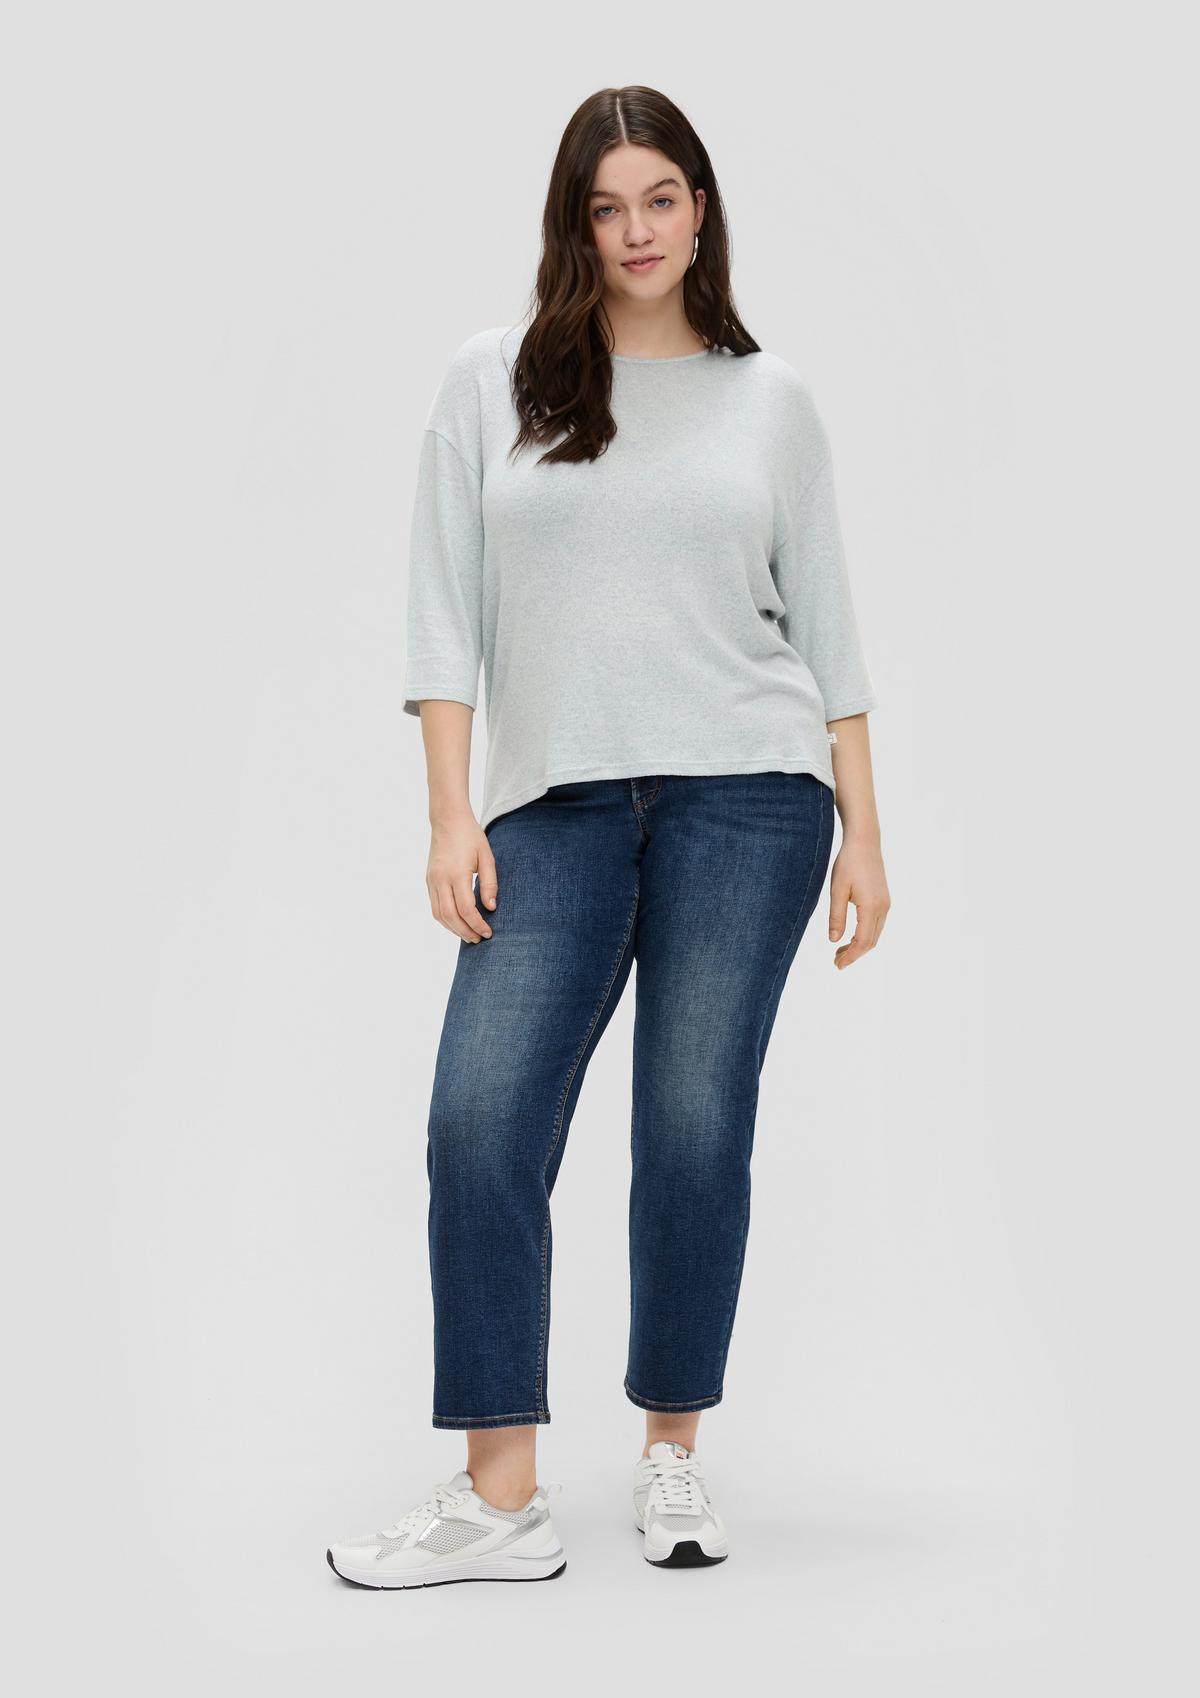 Jeans / slim fit / mid rise / straight leg